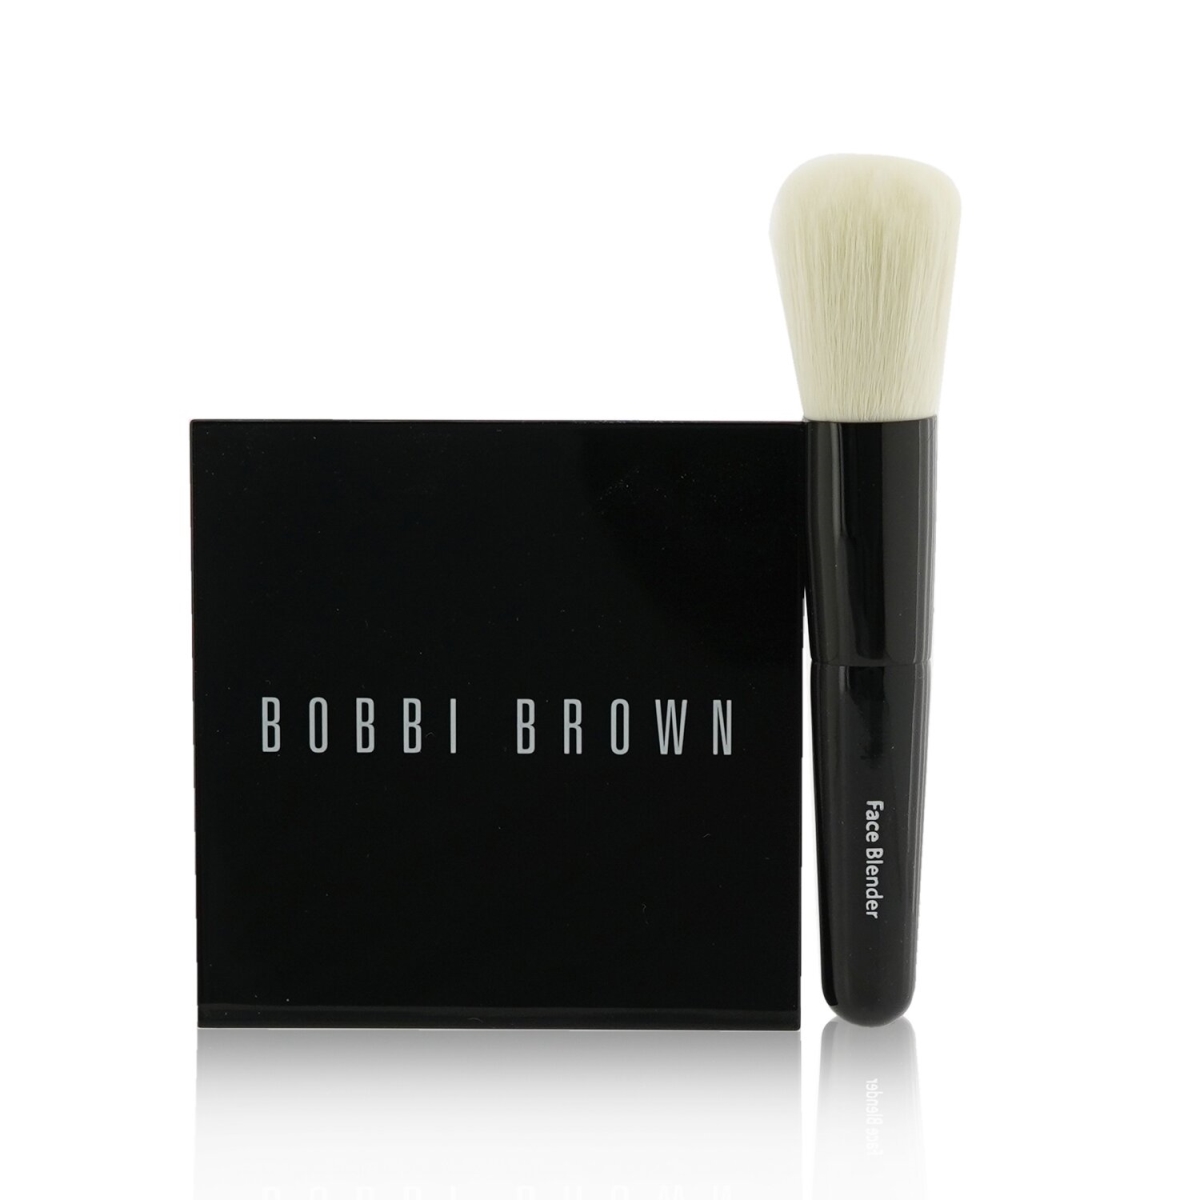 Picture of Bobbi Brown 261869 Highlighting Powder Set with 1x Highlighting Powder & 1x Mini Face Brush&#44; Bronze Glow - 2 Piece